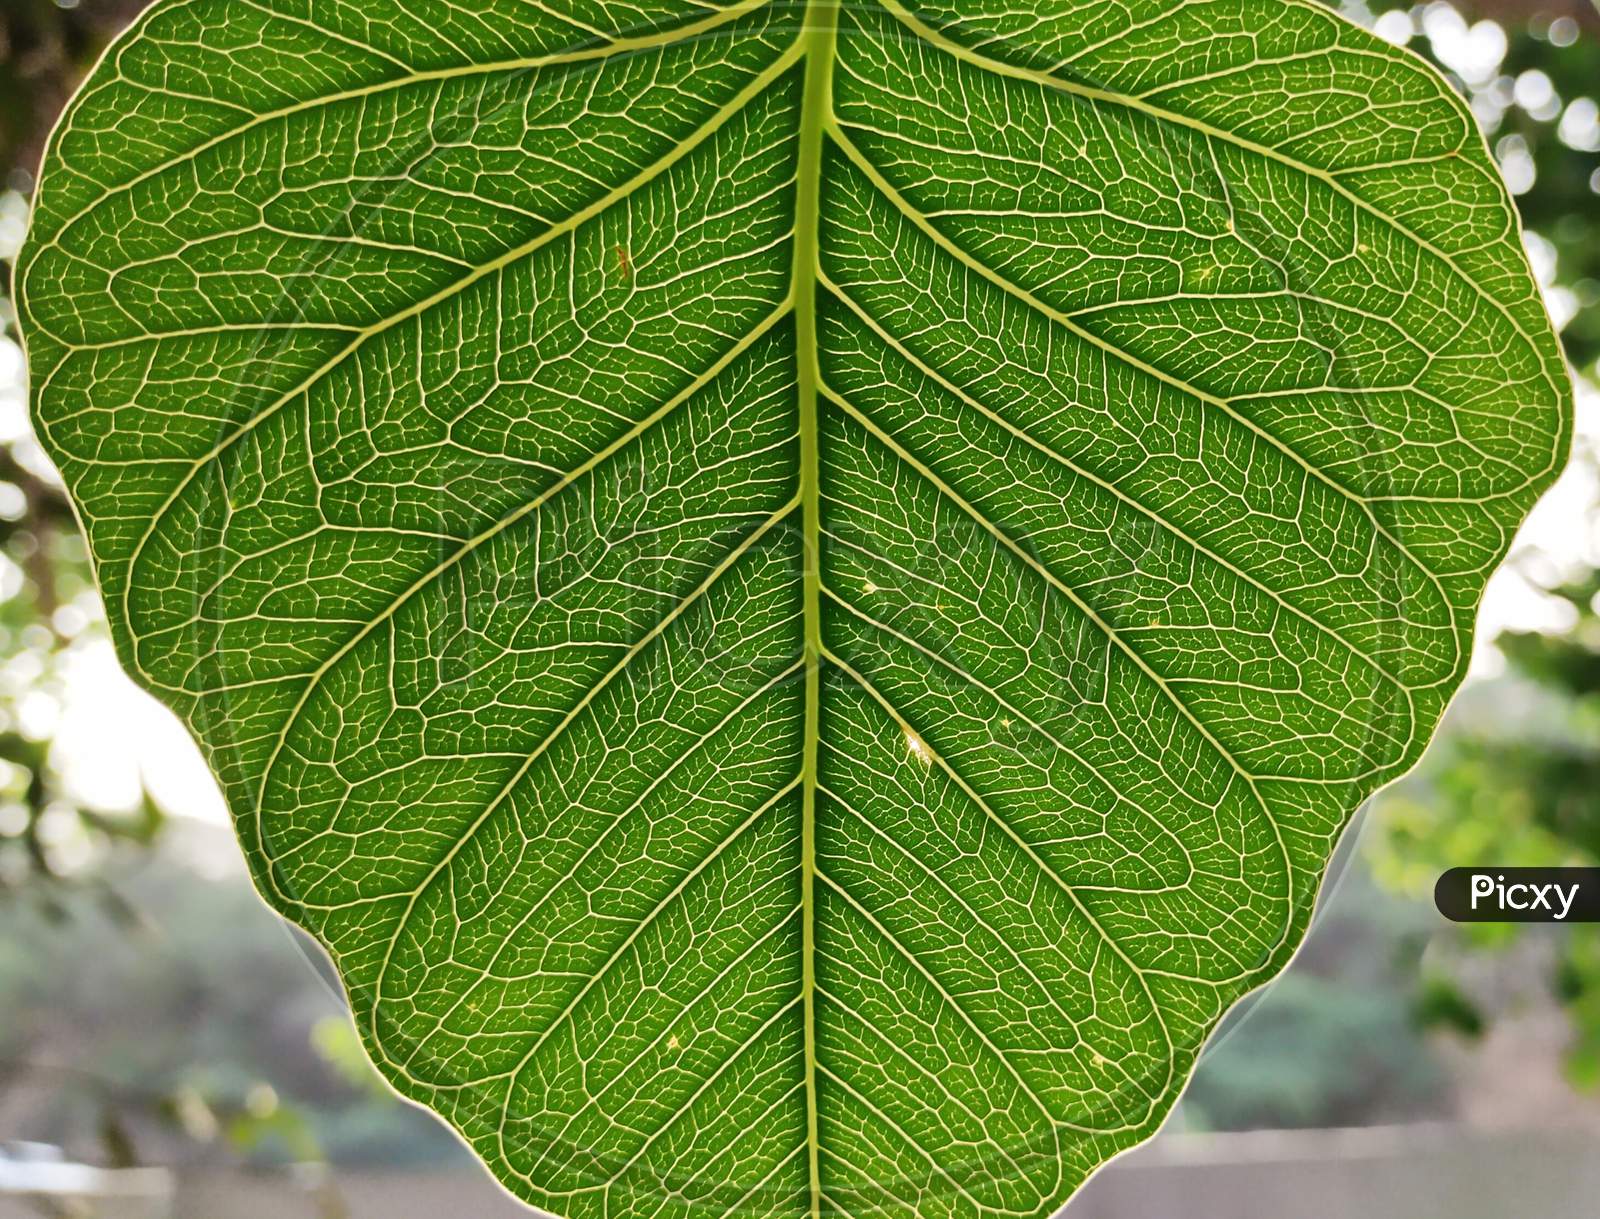 Peepal leaves or bodhi leave